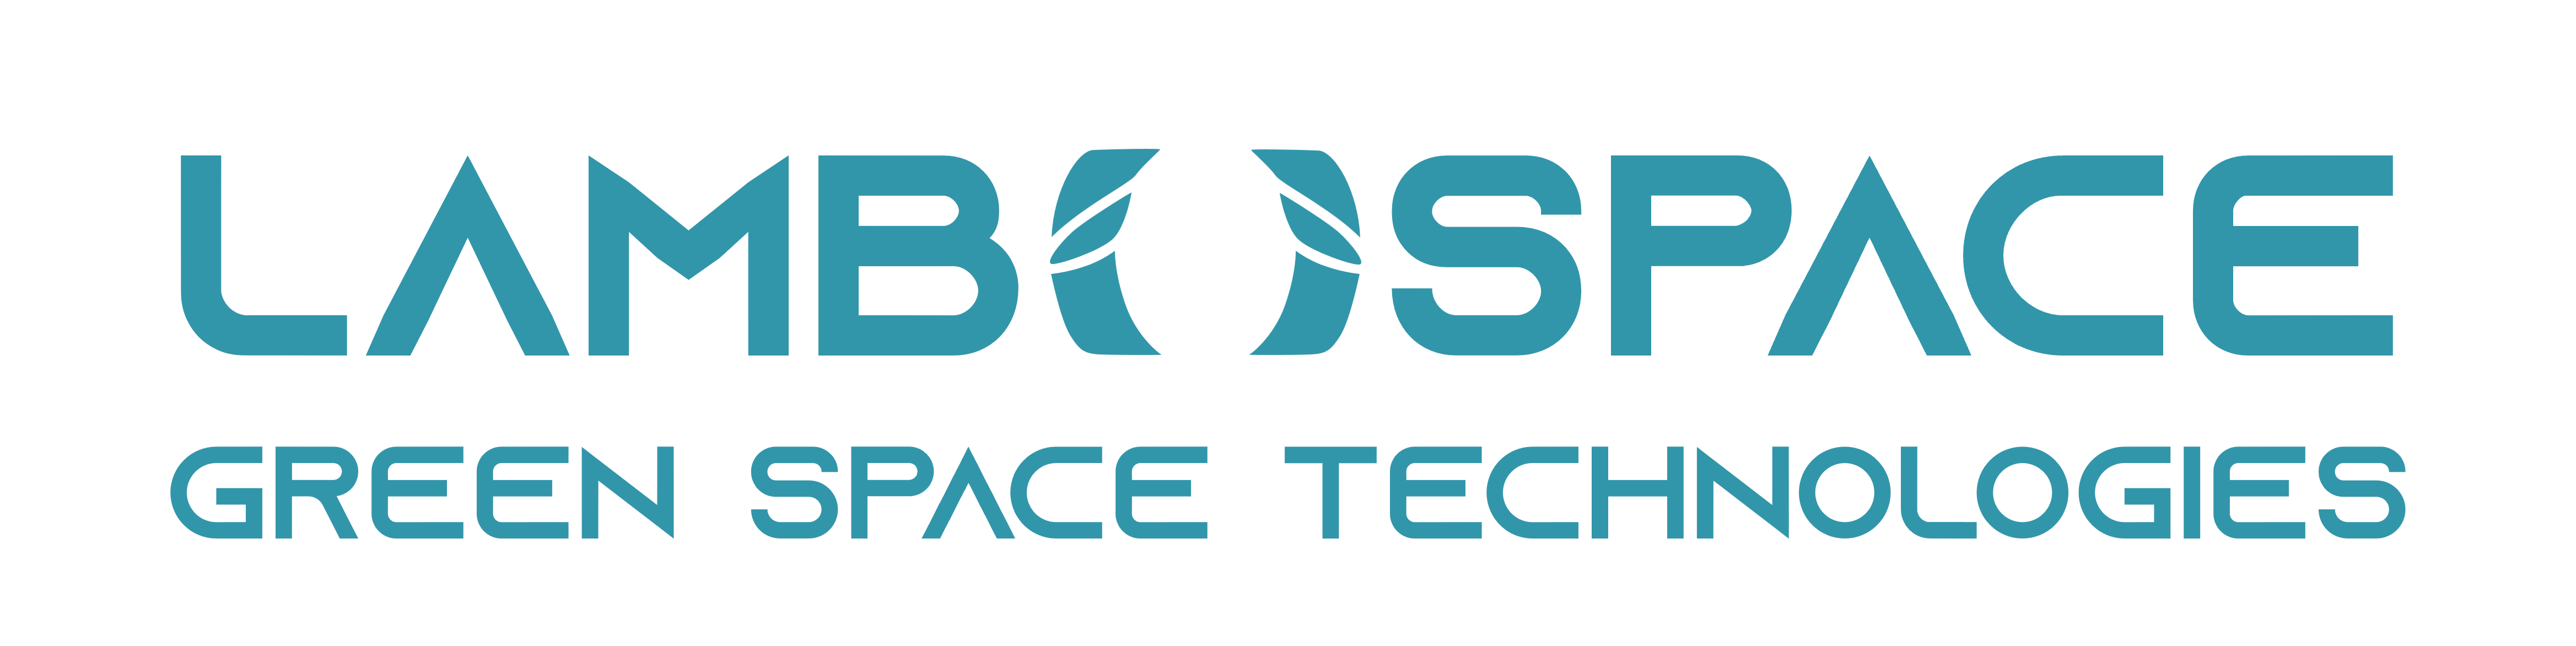 Lamb Space Tec logo